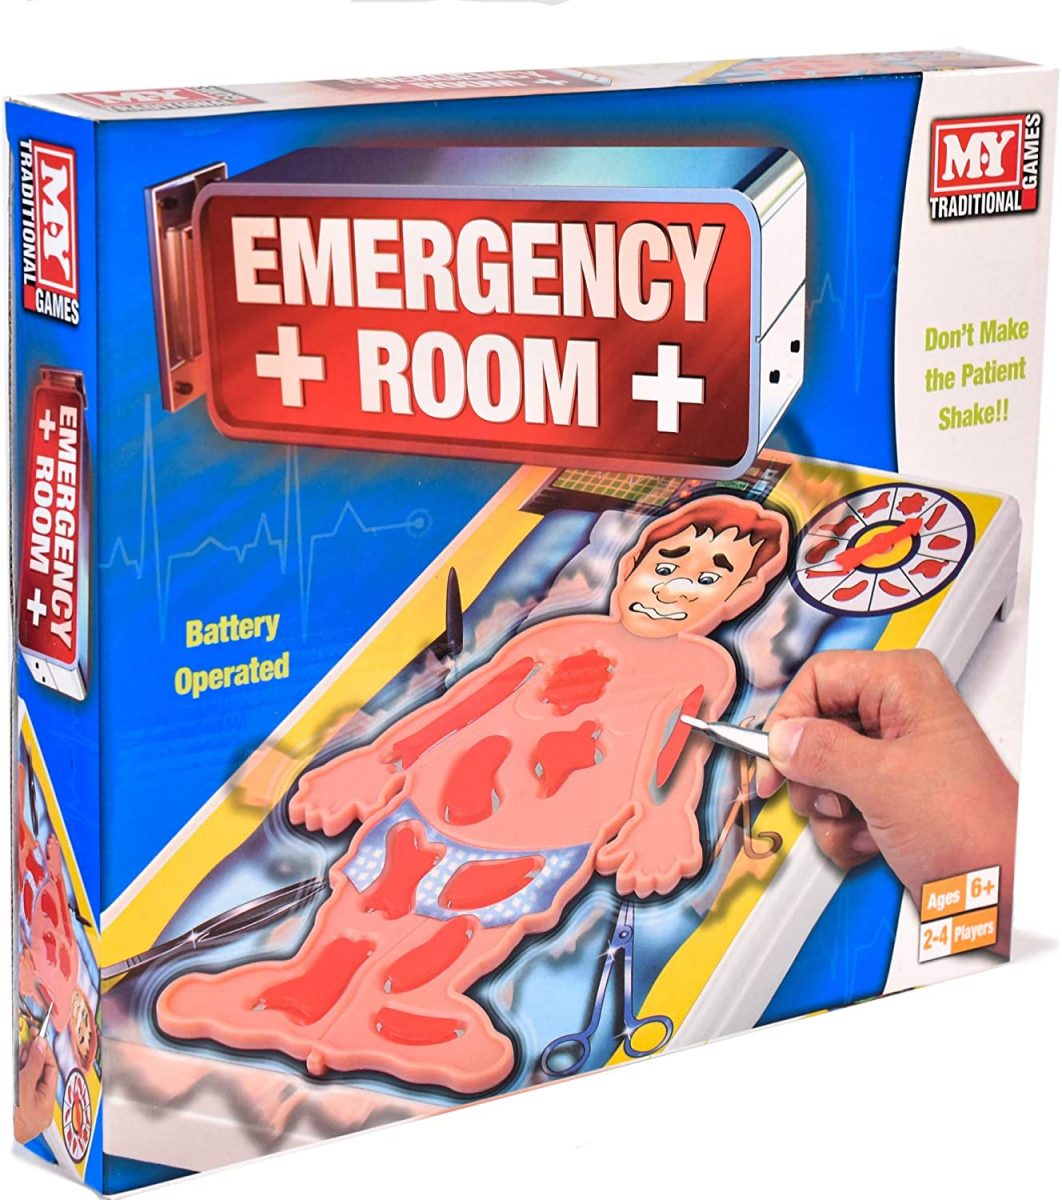 Emergency Room Board Game